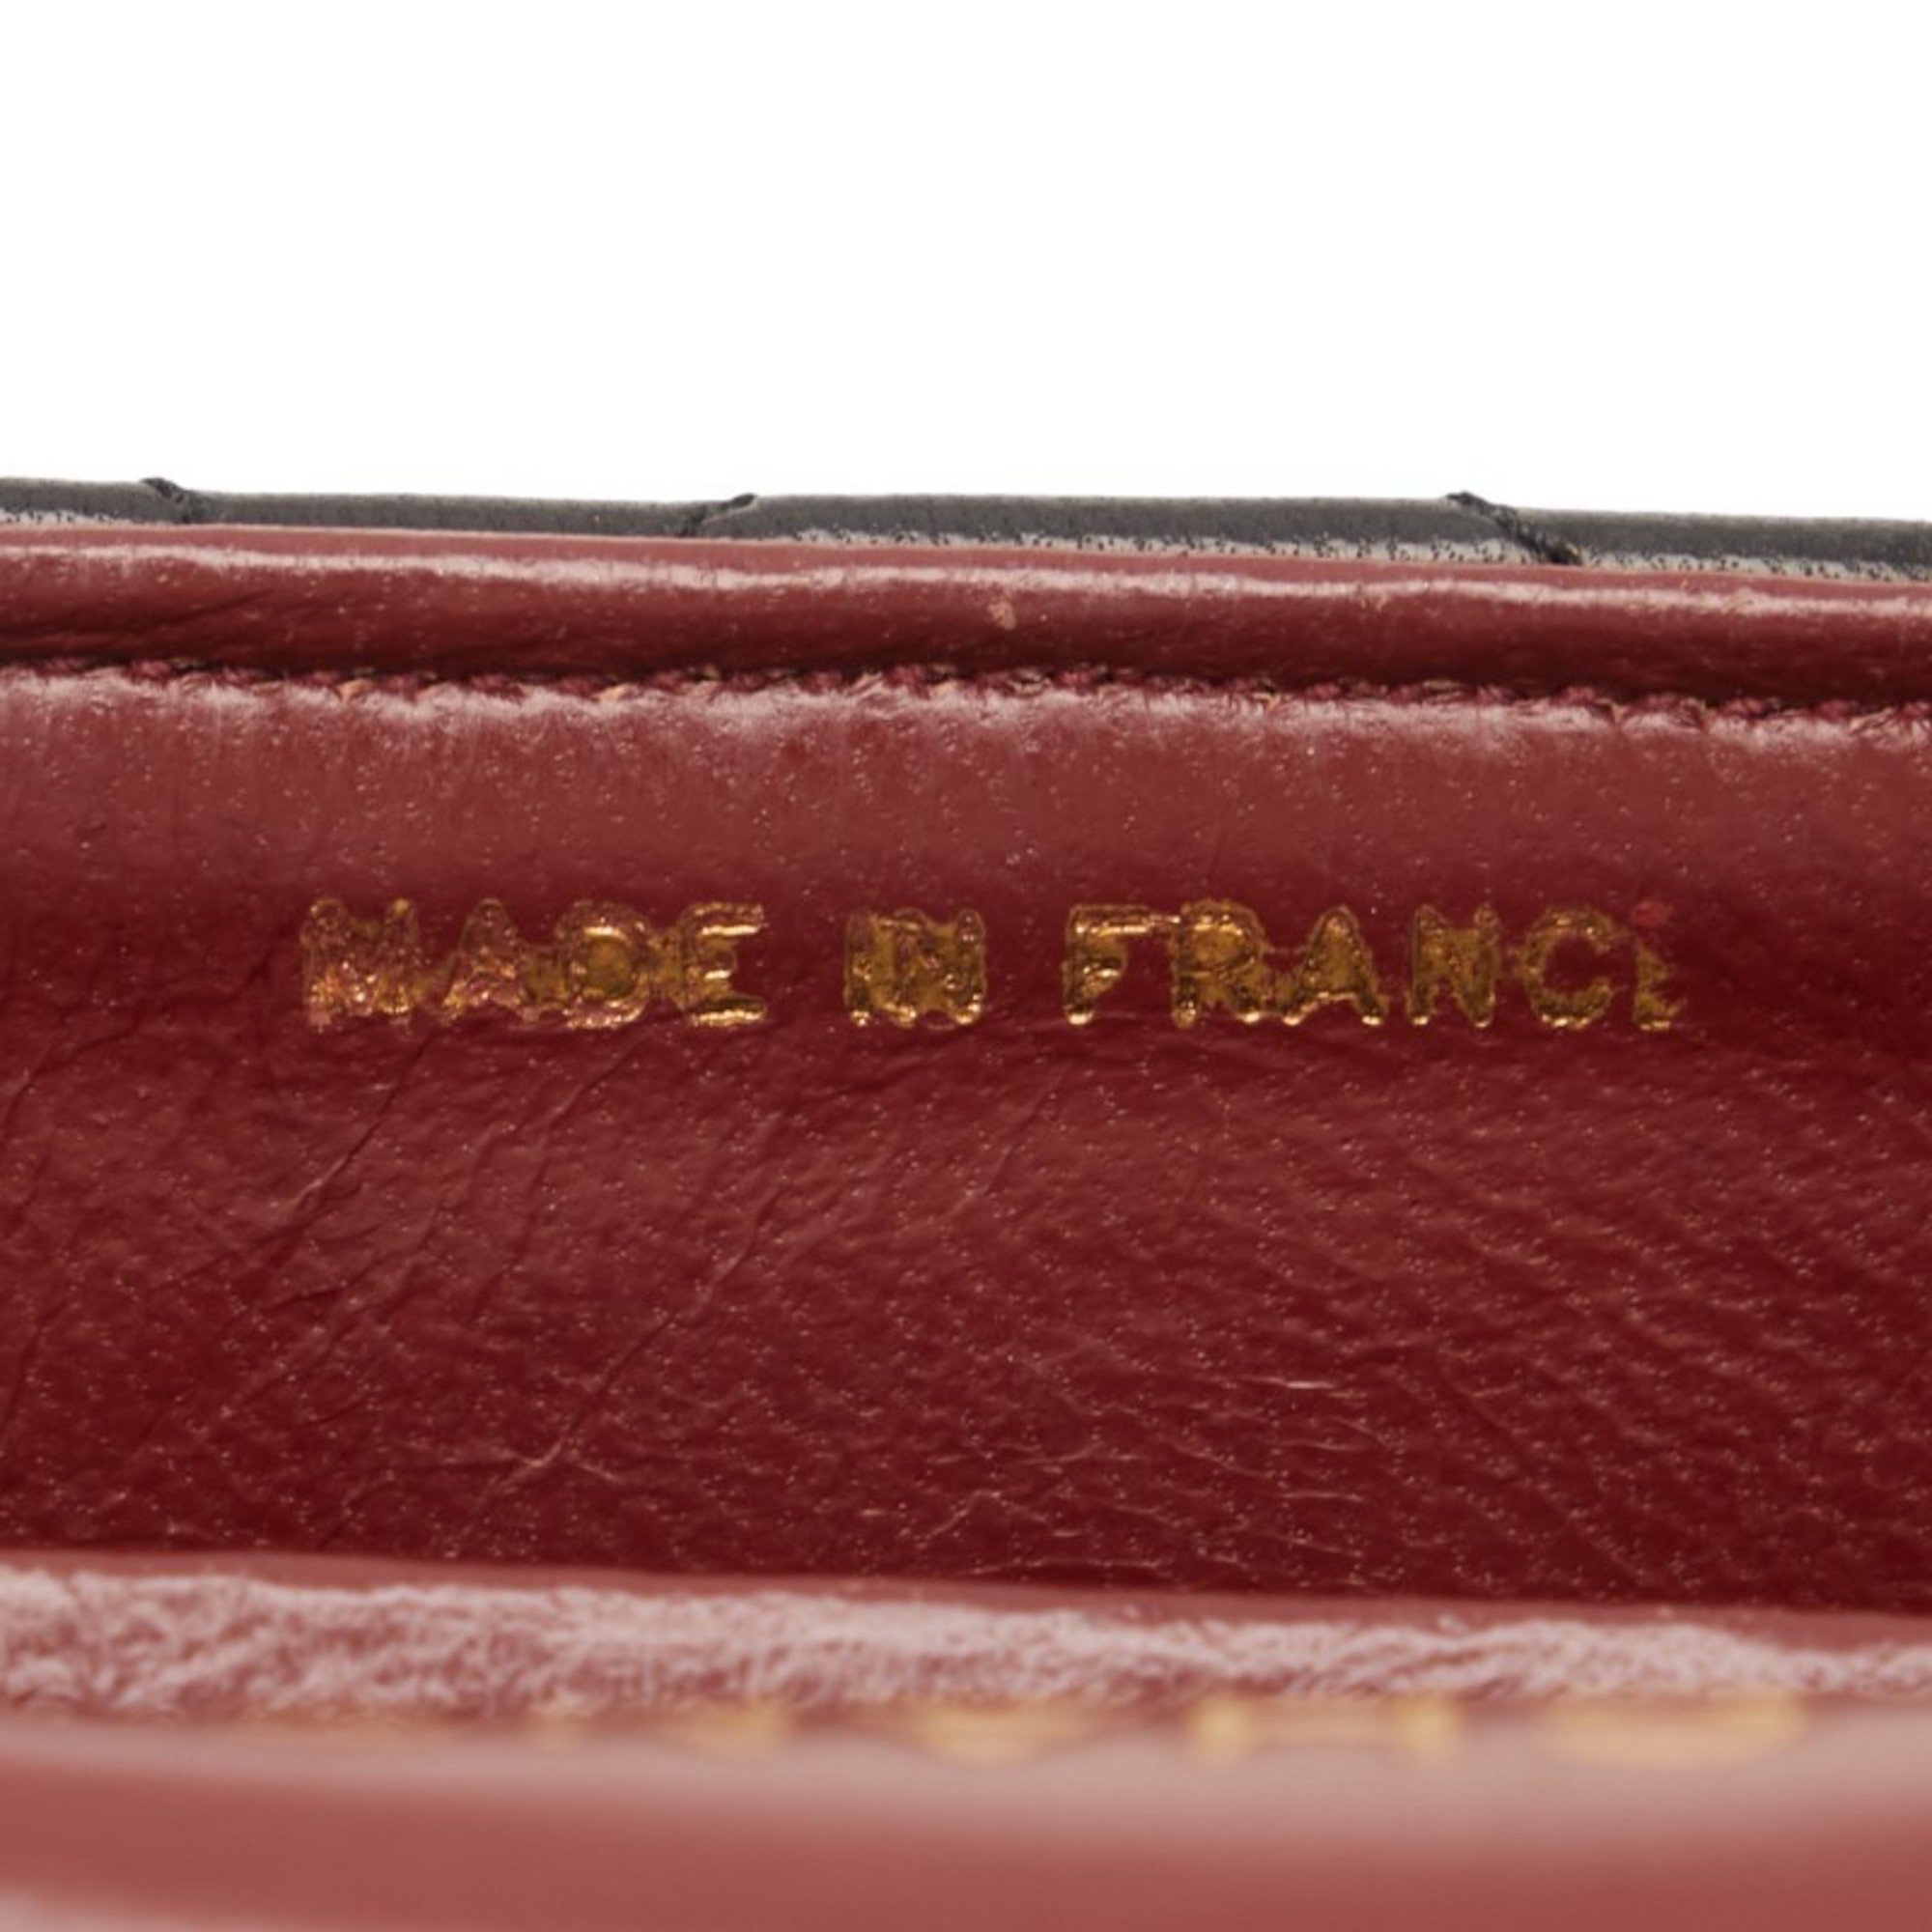 Chanel Matelasse Coco Mark Chain Shoulder Bag Black Gold Lambskin Women's CHANEL